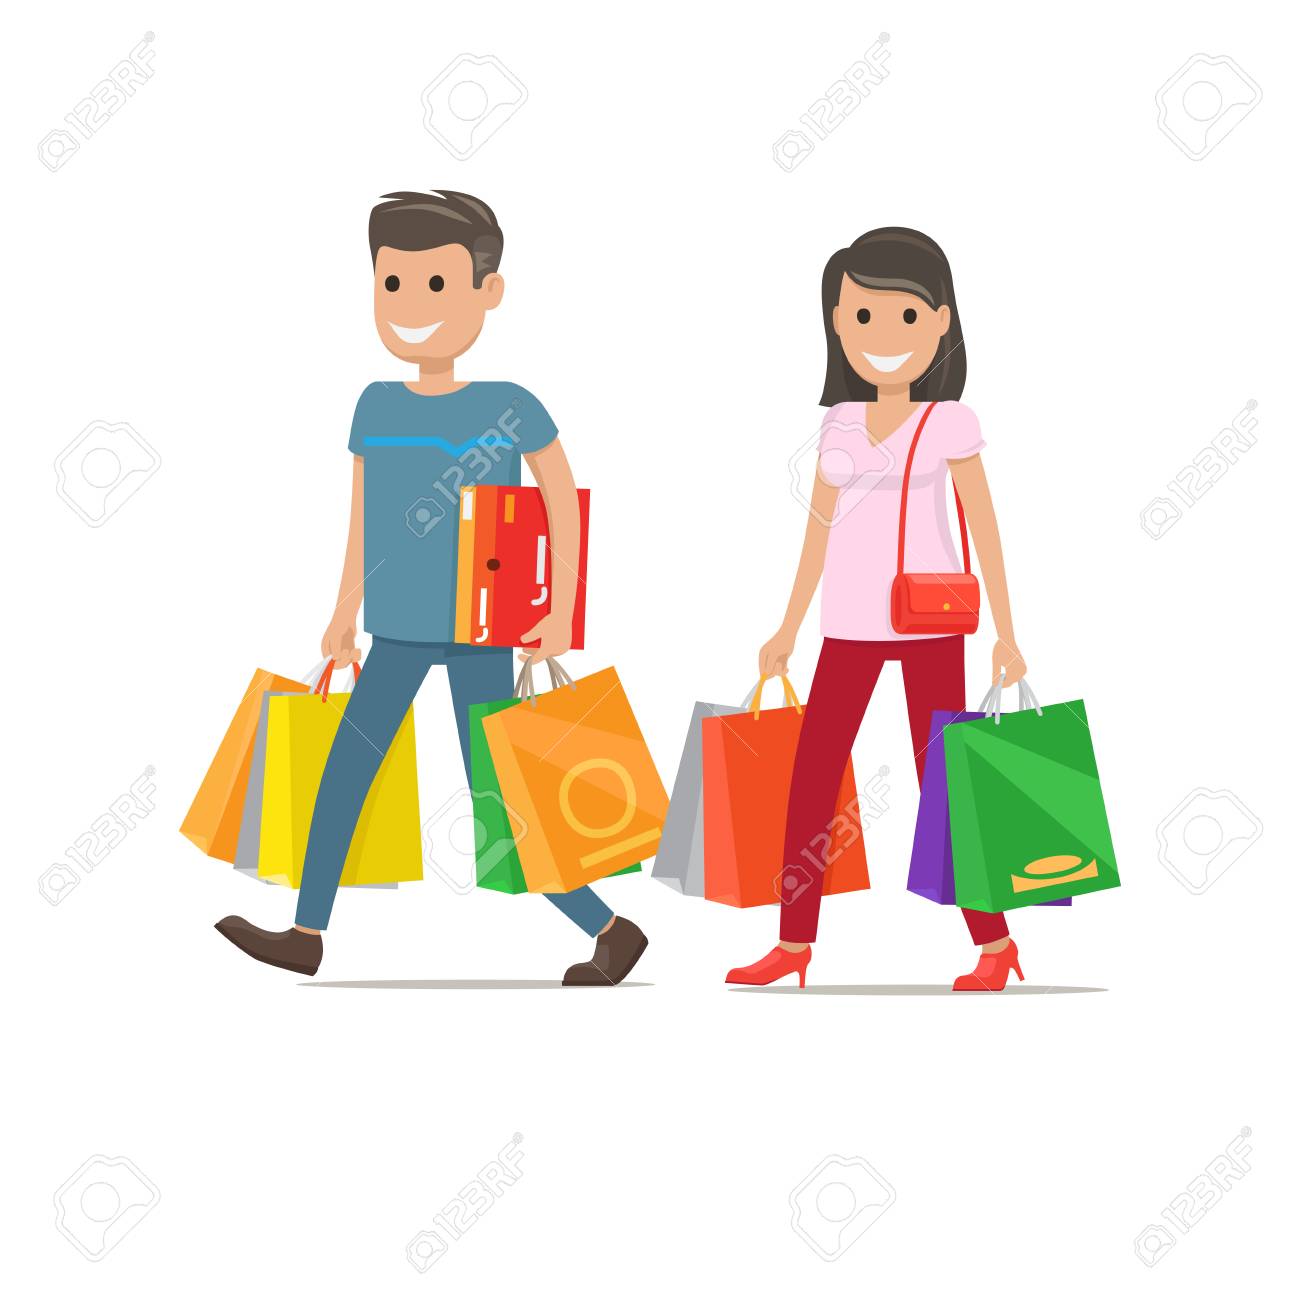 They want to go shopping. Cartoon шоппинг. Шоппинг рисунок. Поход по магазинам. Иллюстрация пара с покупками.